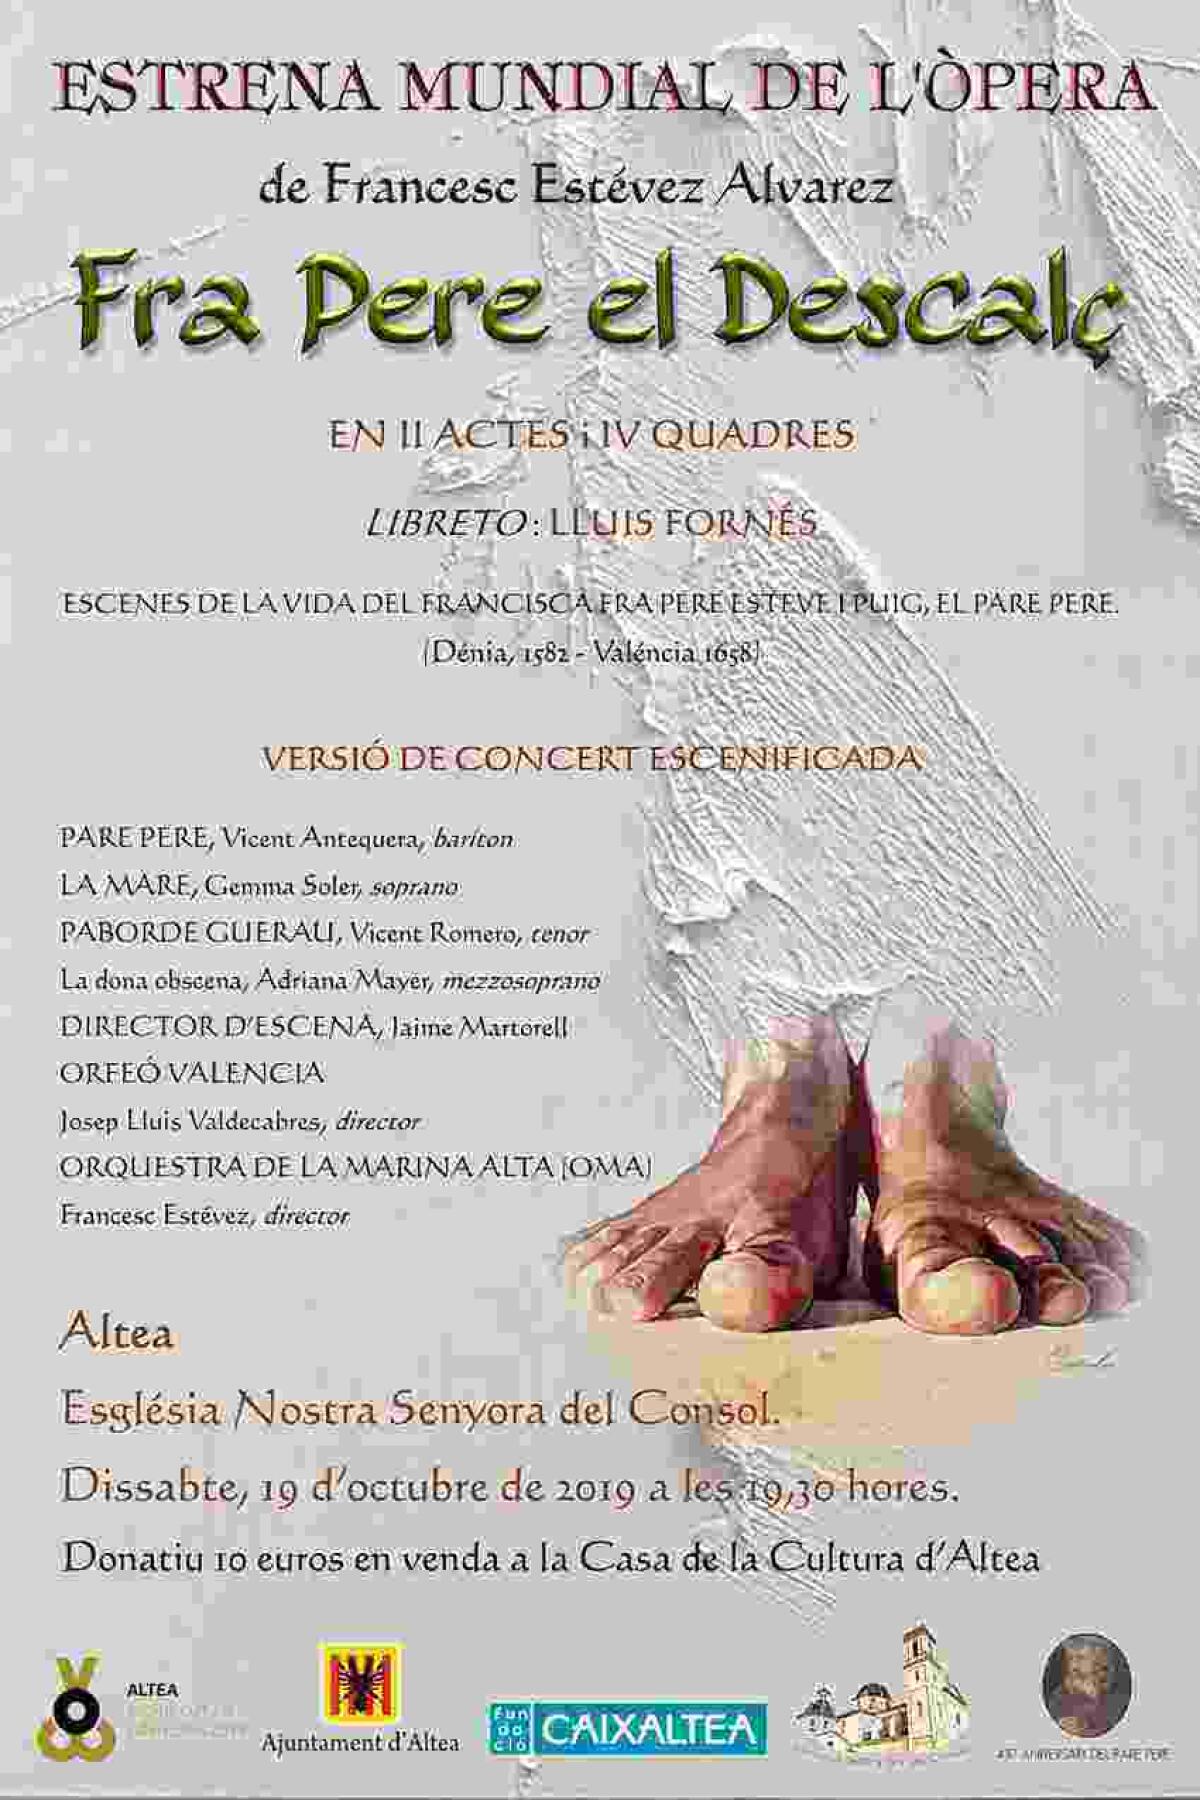 Altea acogerá el estreno de la primera ópera en valenciano del S.XXI “Fra Pere el Descalç”